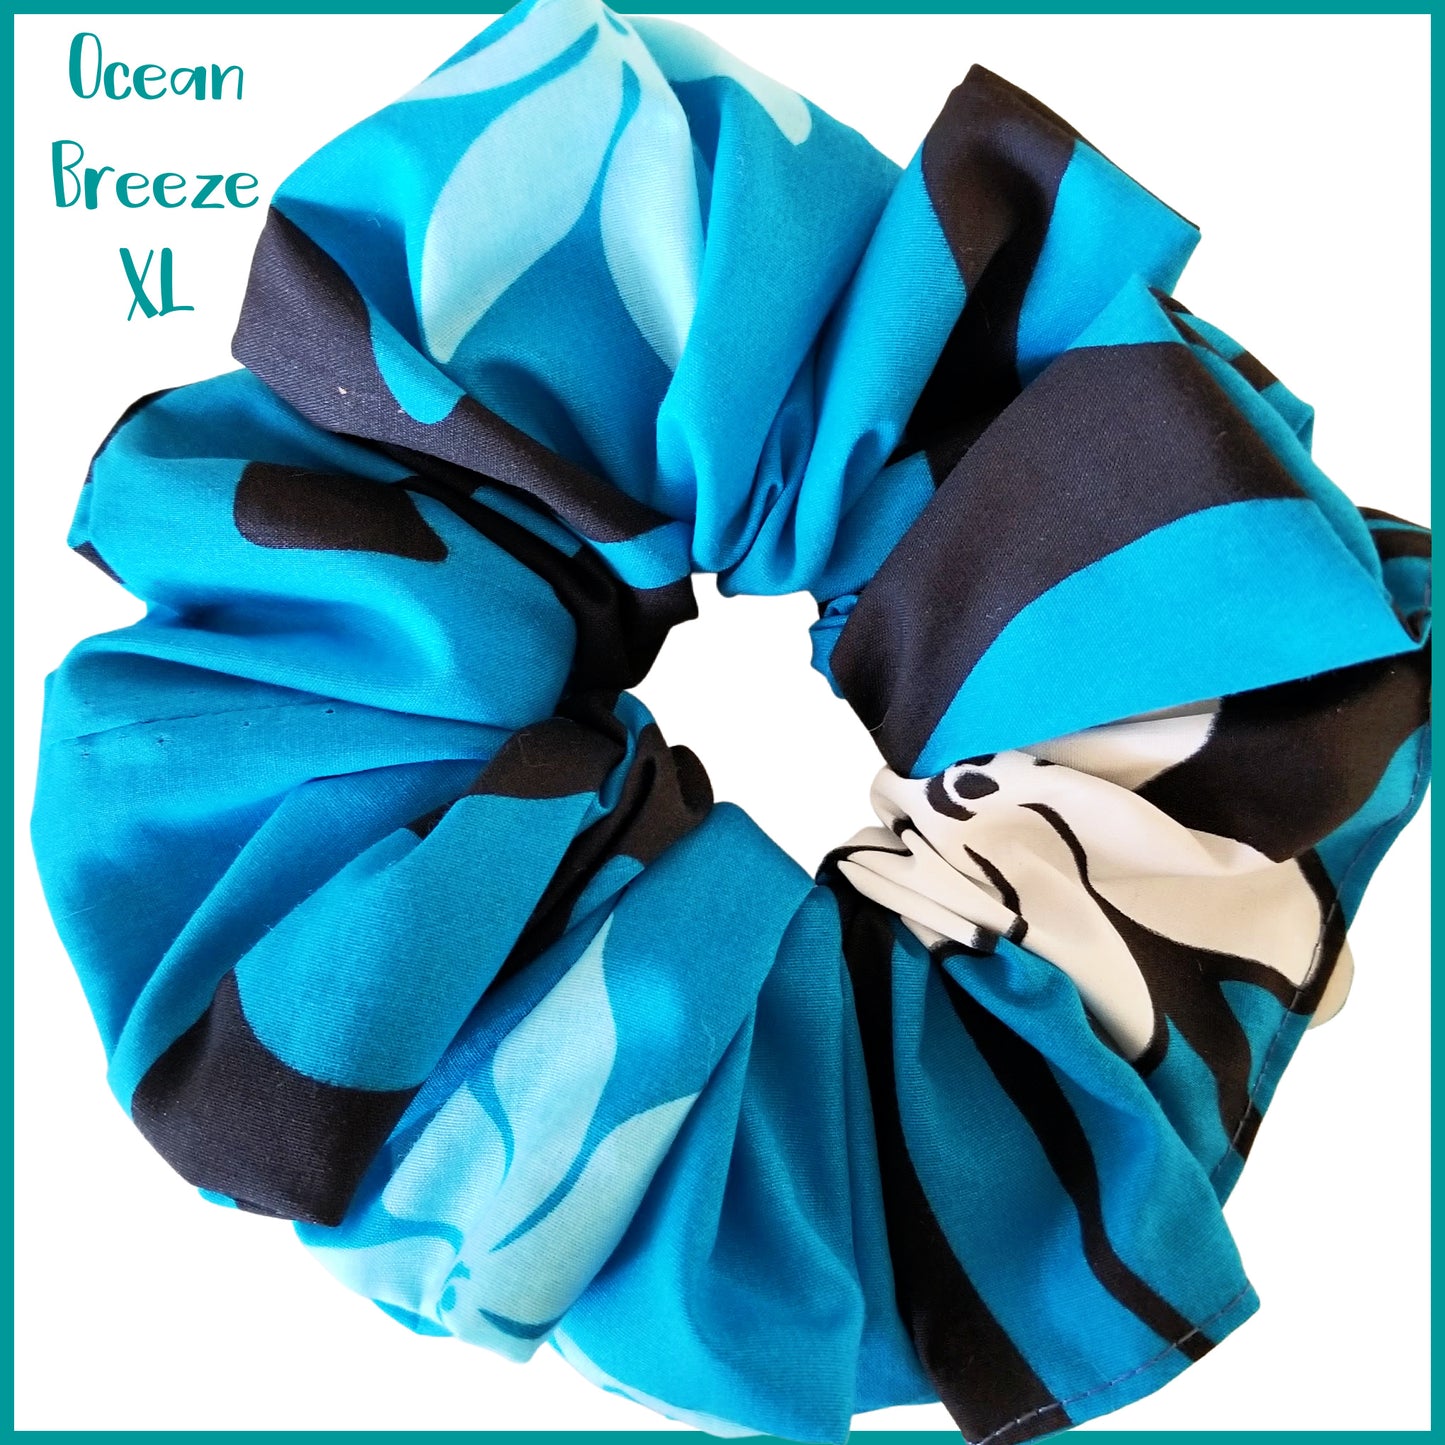 Giant Hawaiian Scrunchie, Ocean Breeze XL Scrunchie